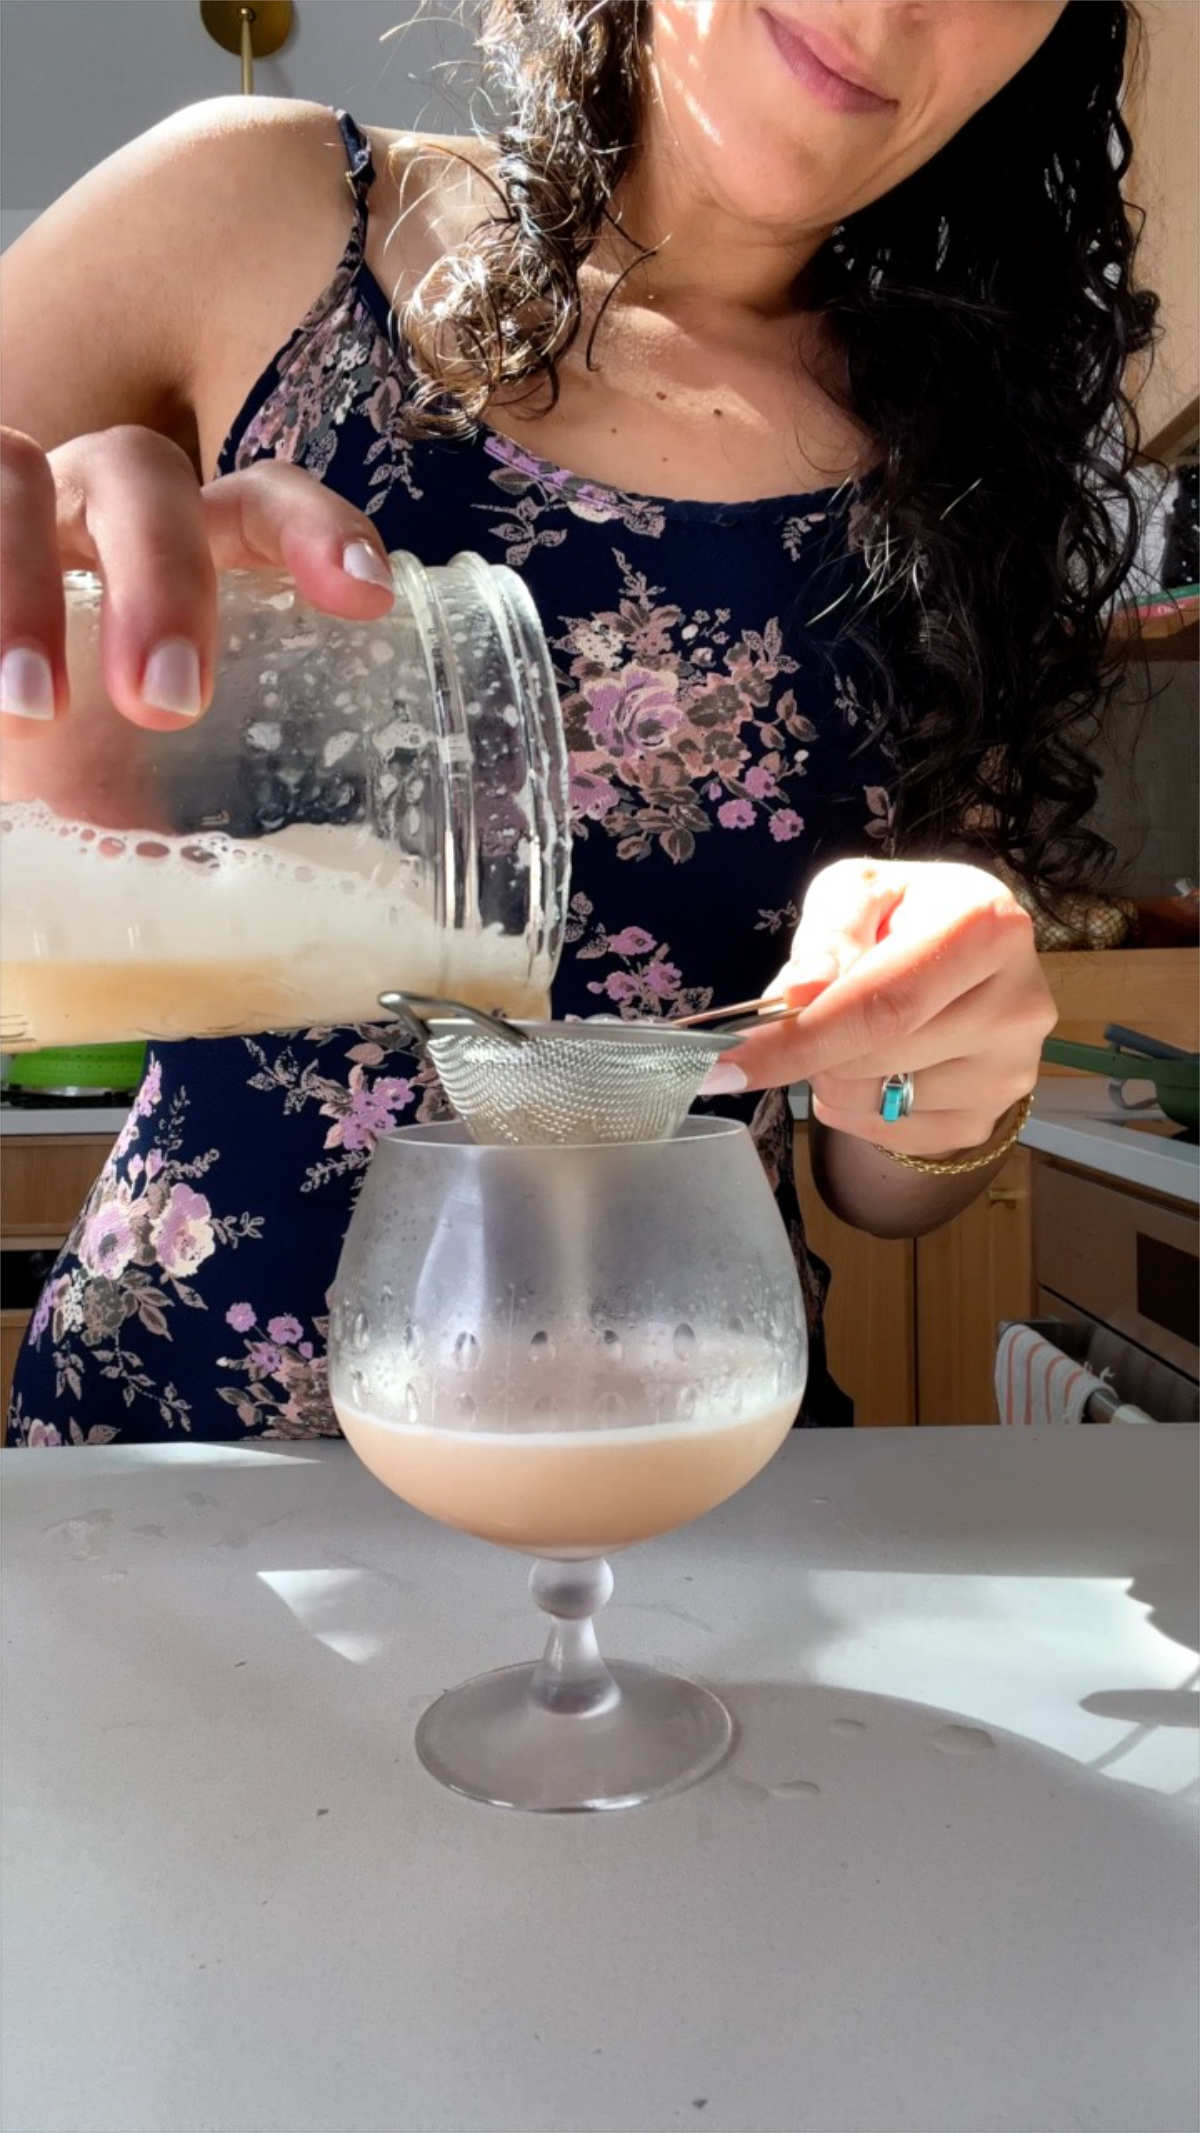 Straining peach liquid into a glass.